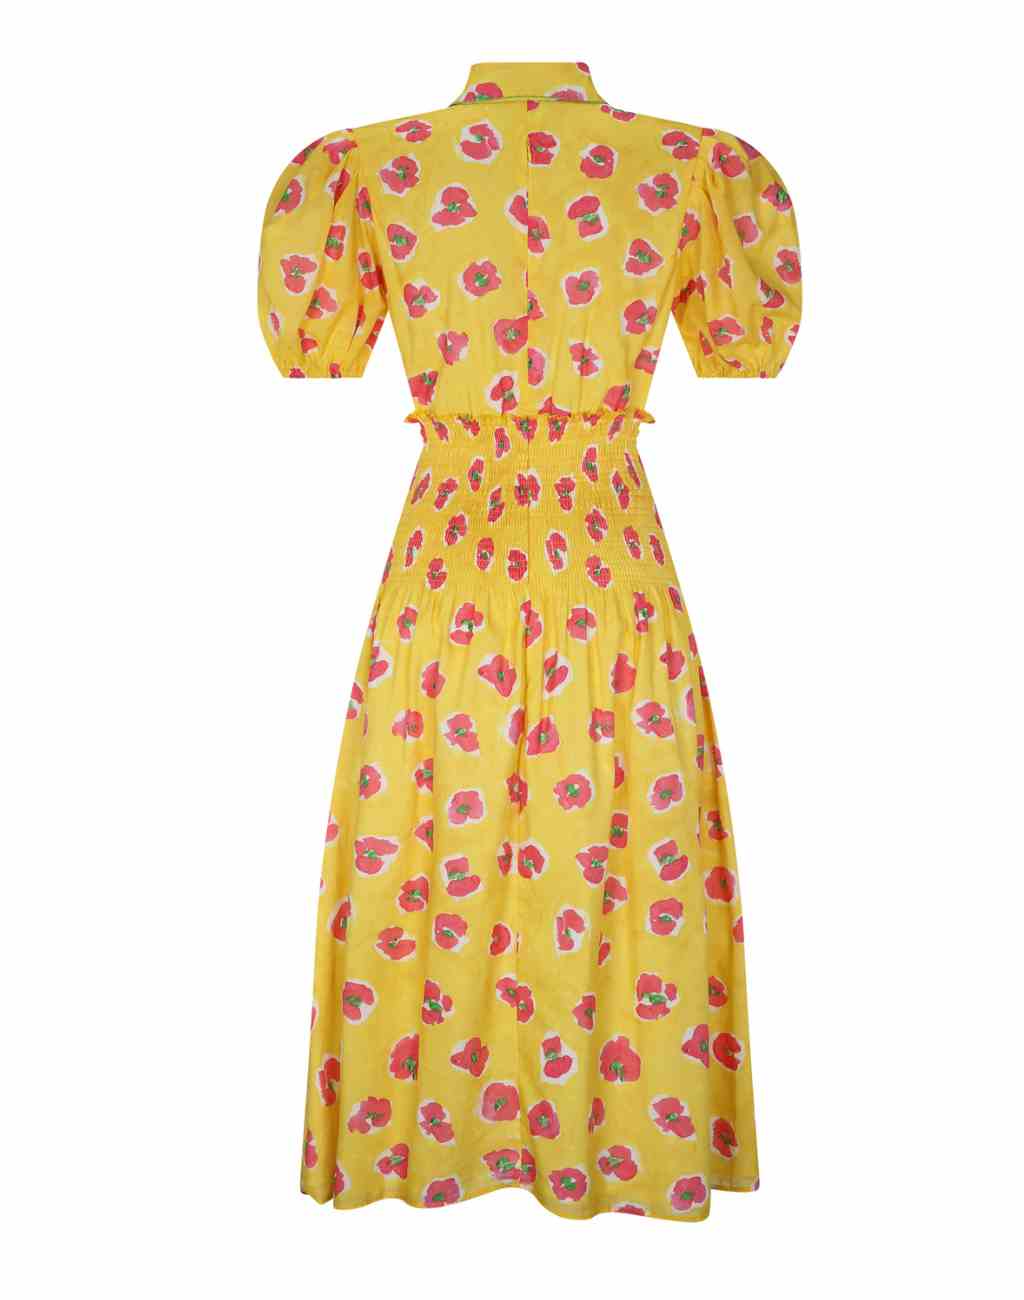 Begonia Print Mote Dress with Puffed Sleeves and Shirred Waist - Visit Nifty De Loreta 